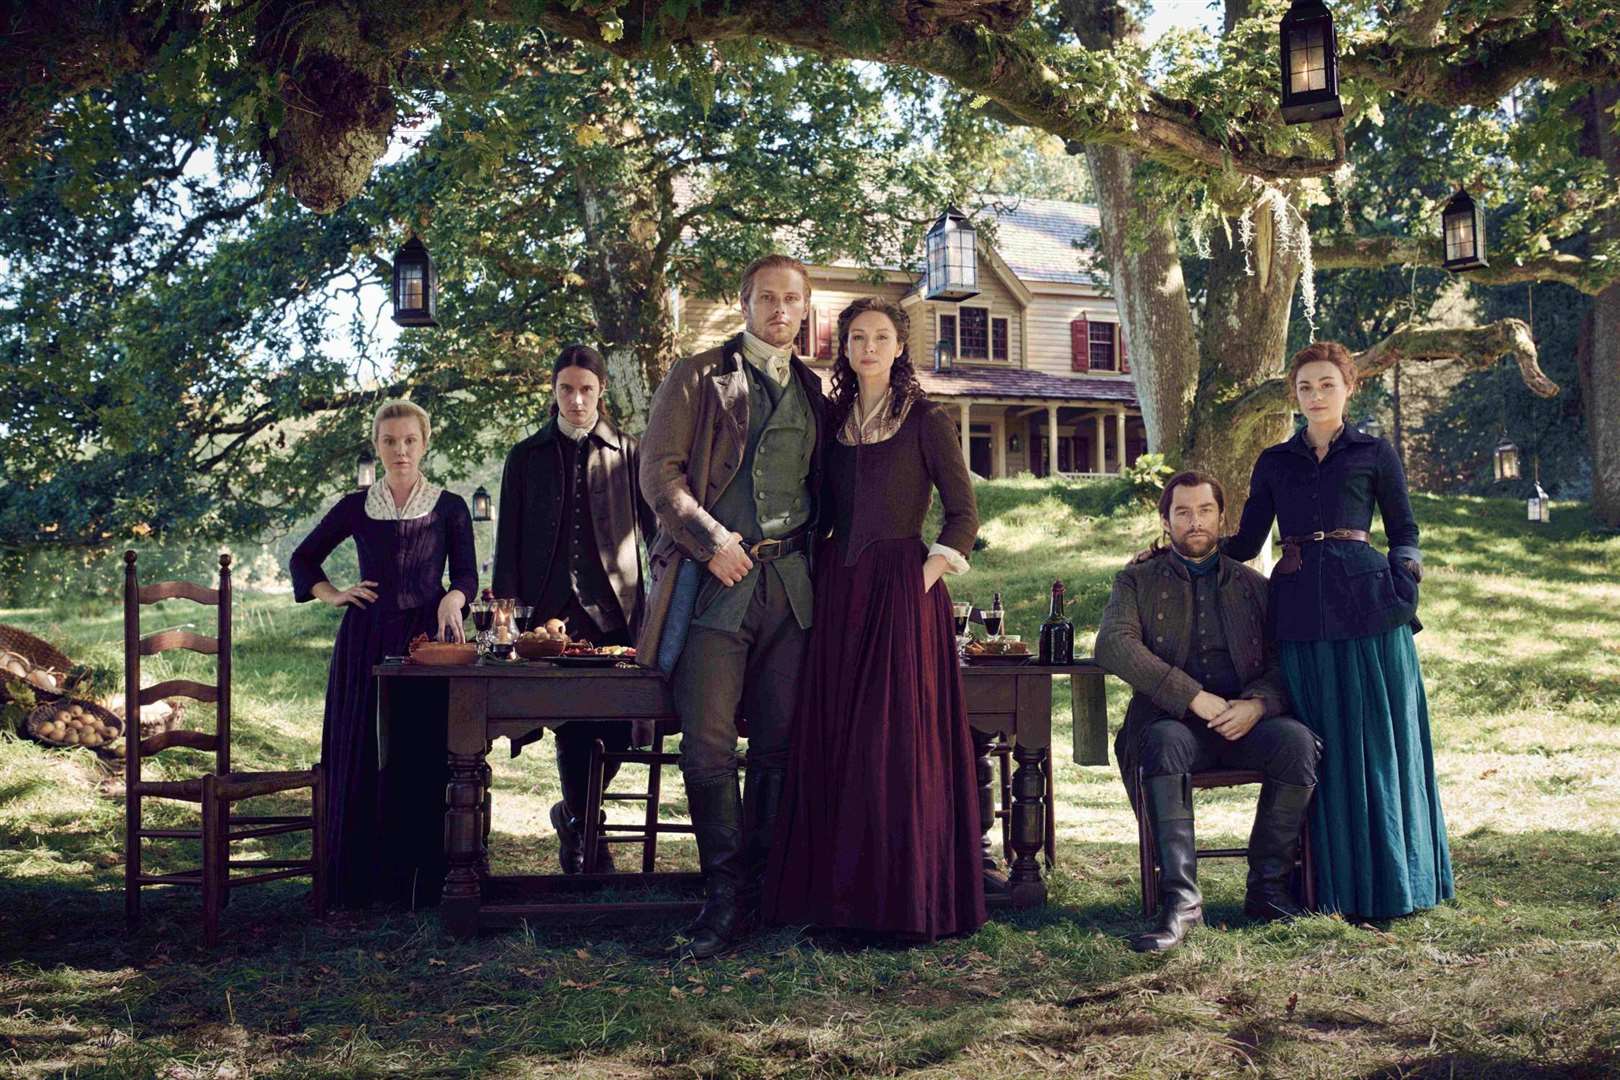 The Outlander cast.